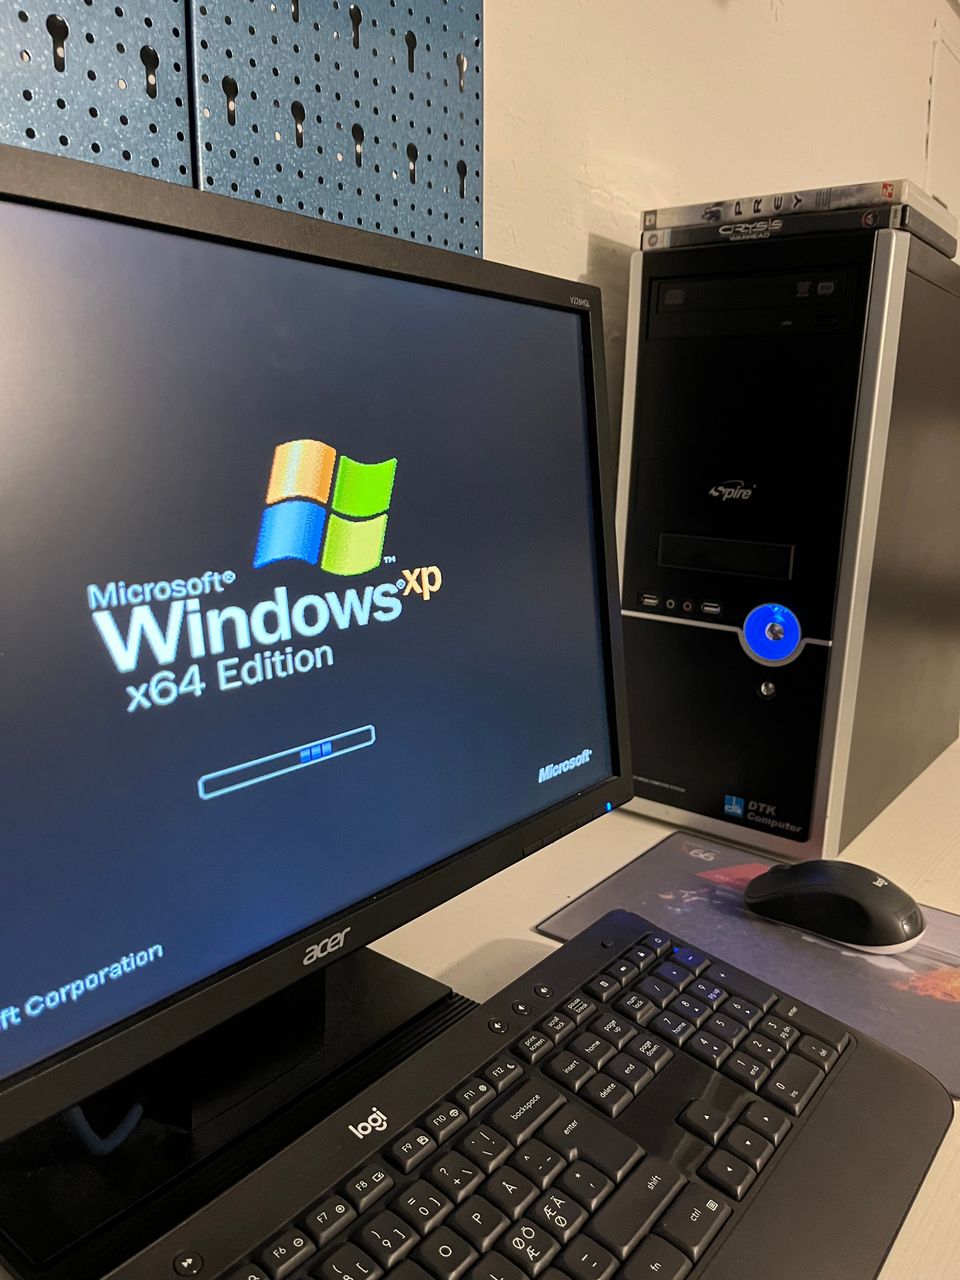 Windows Xp pöytäkone